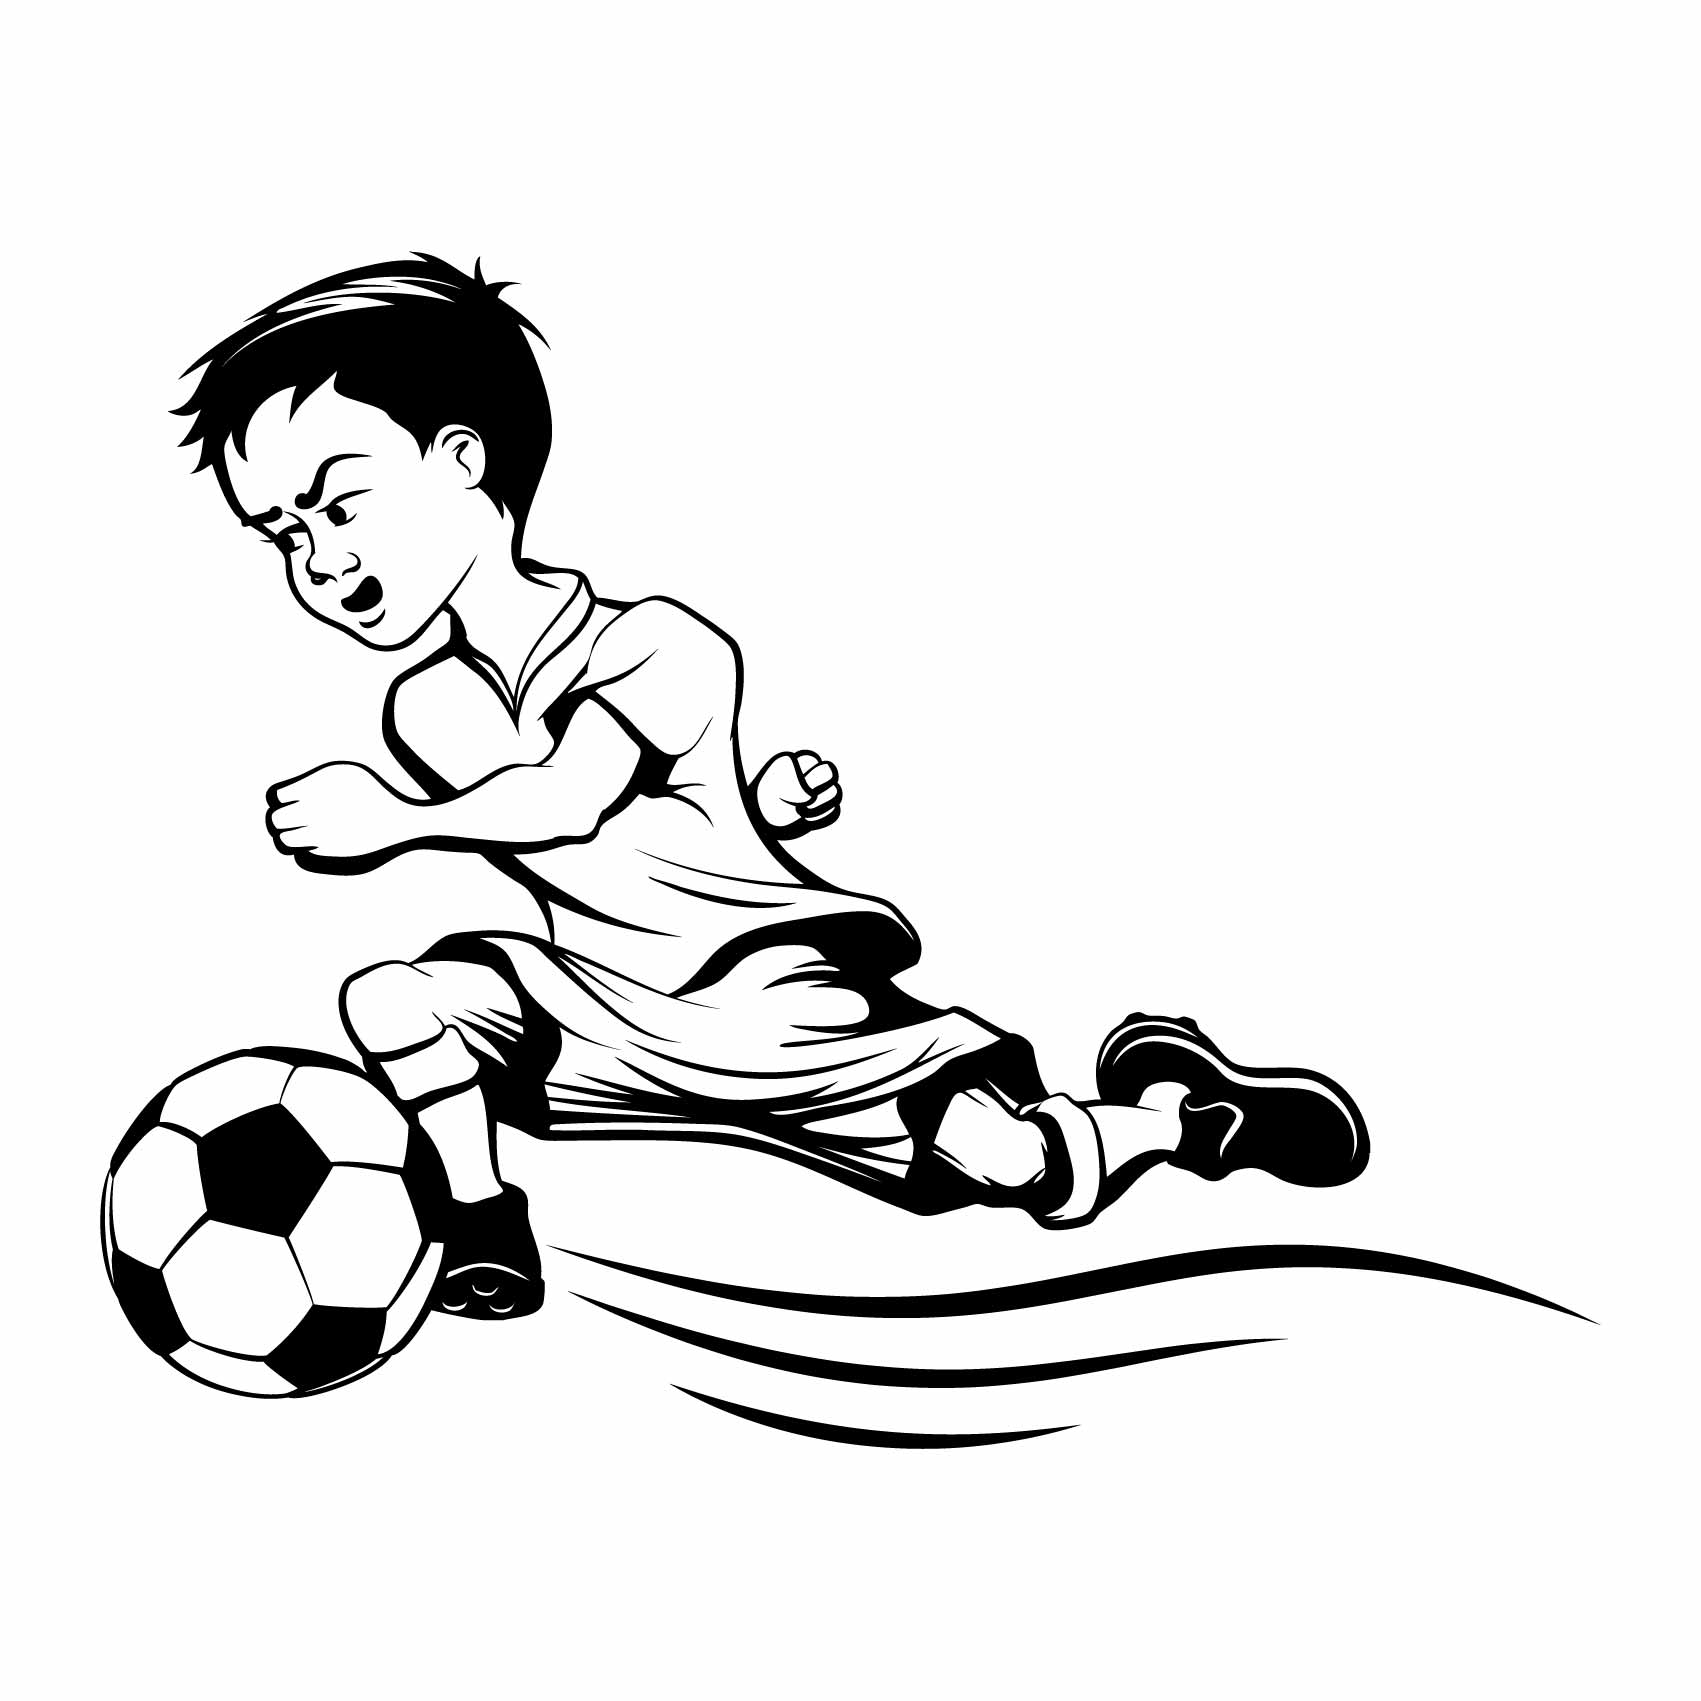 stickers-enfant-football-ref1sport-stickers-muraux-foot-autocollant-football-deco-chambre-enfant-salon-sticker-mural-sport-(2)